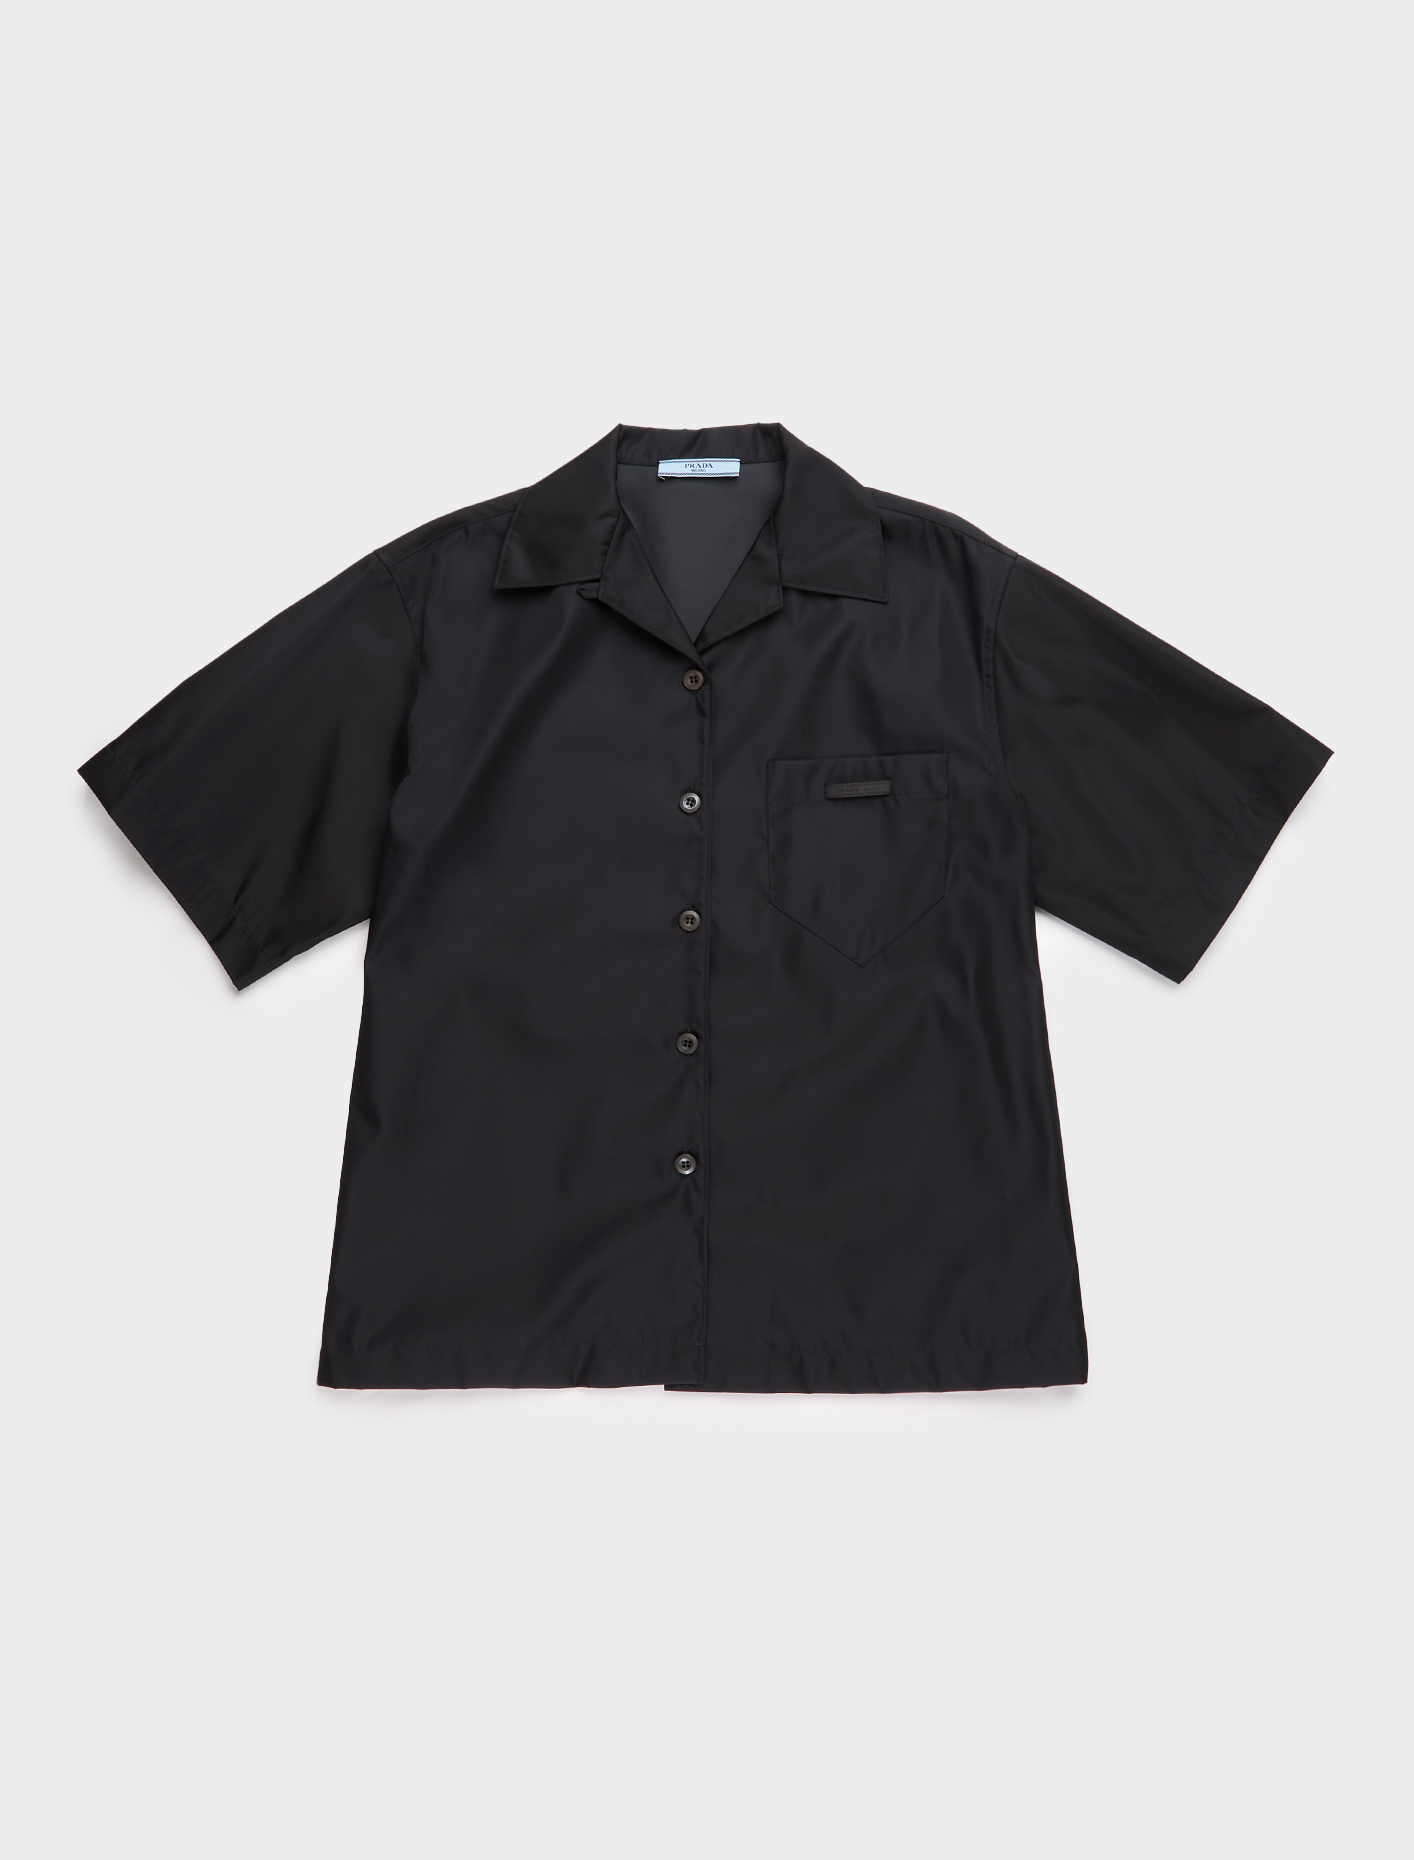 Prada Re-Nylon Shirt in Black | Voo Store Berlin | Worldwide Shipping